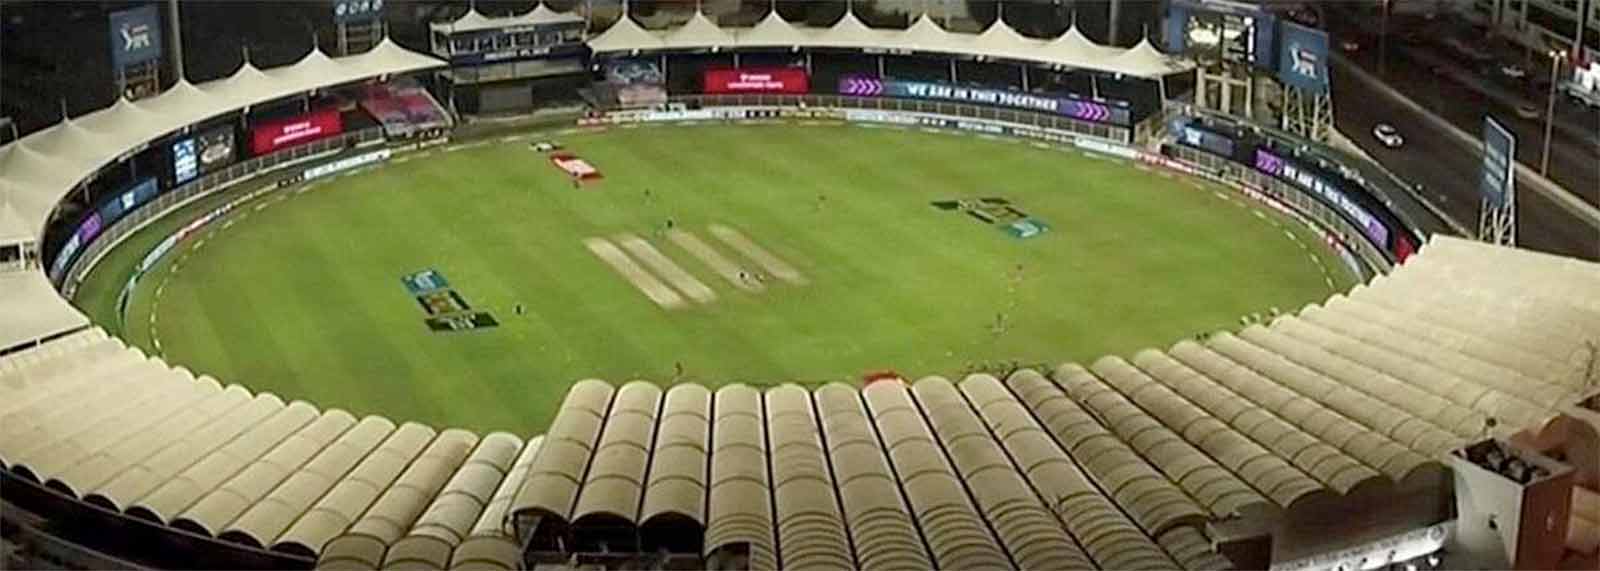 Sharjah-Cricket-Ground-lead-1600